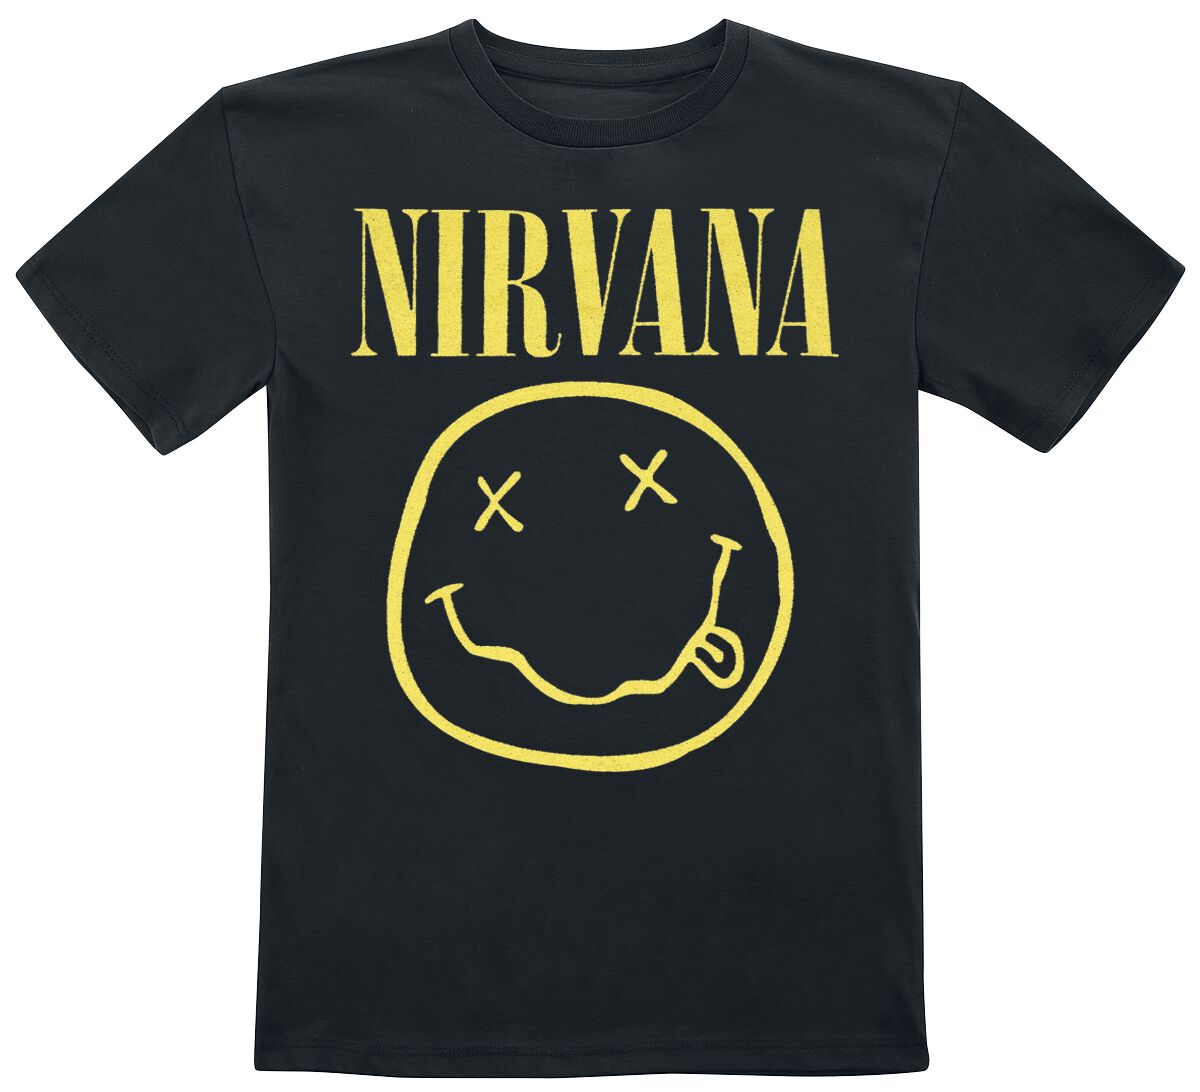 T-shirt de Nirvana - Kids - Smiley - 98/104 à 134/146 - pour filles & garçonse - noir